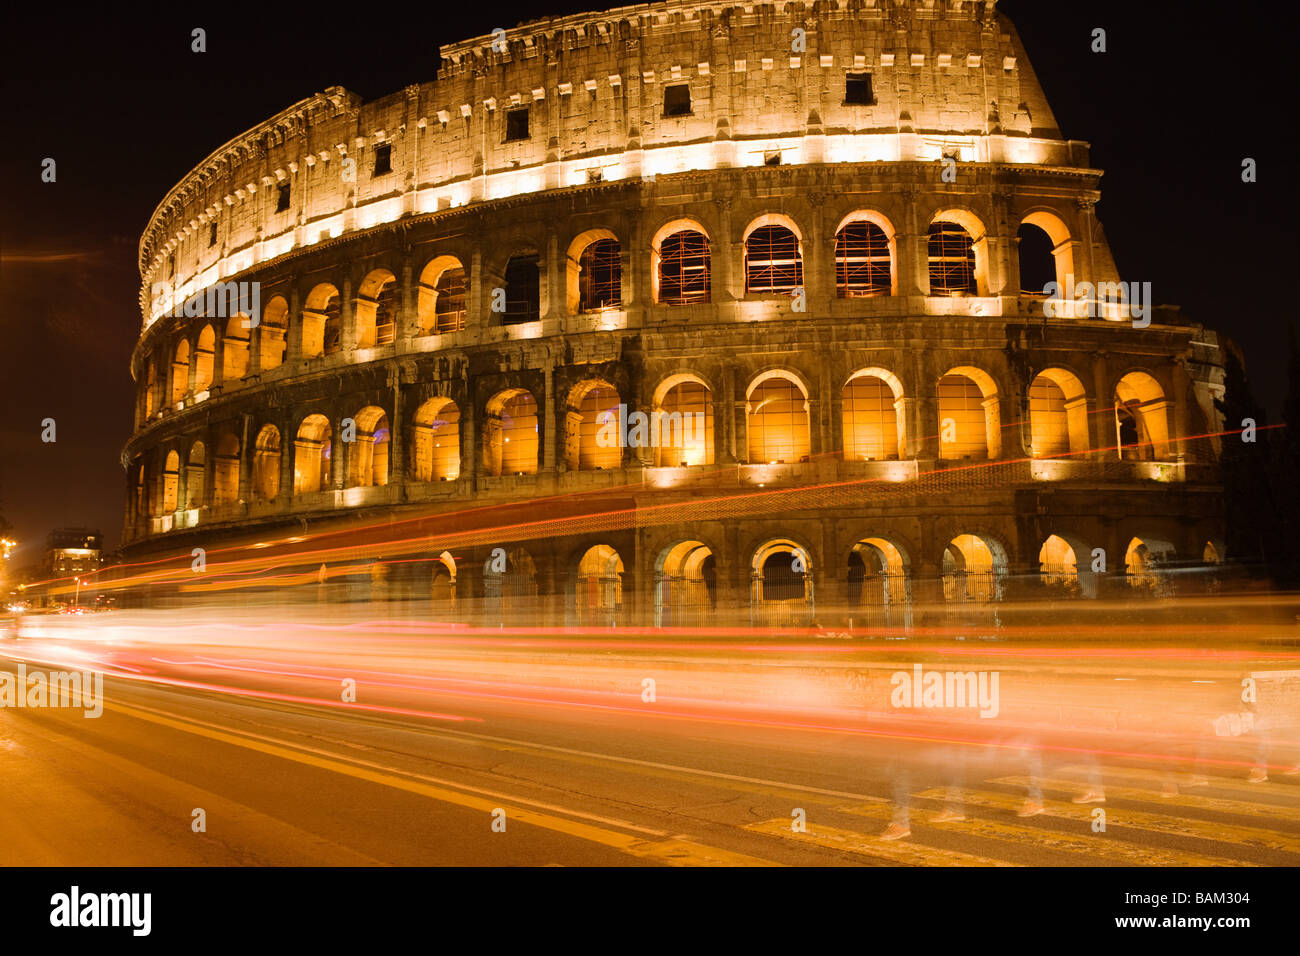 Colosseum rome Stock Photo